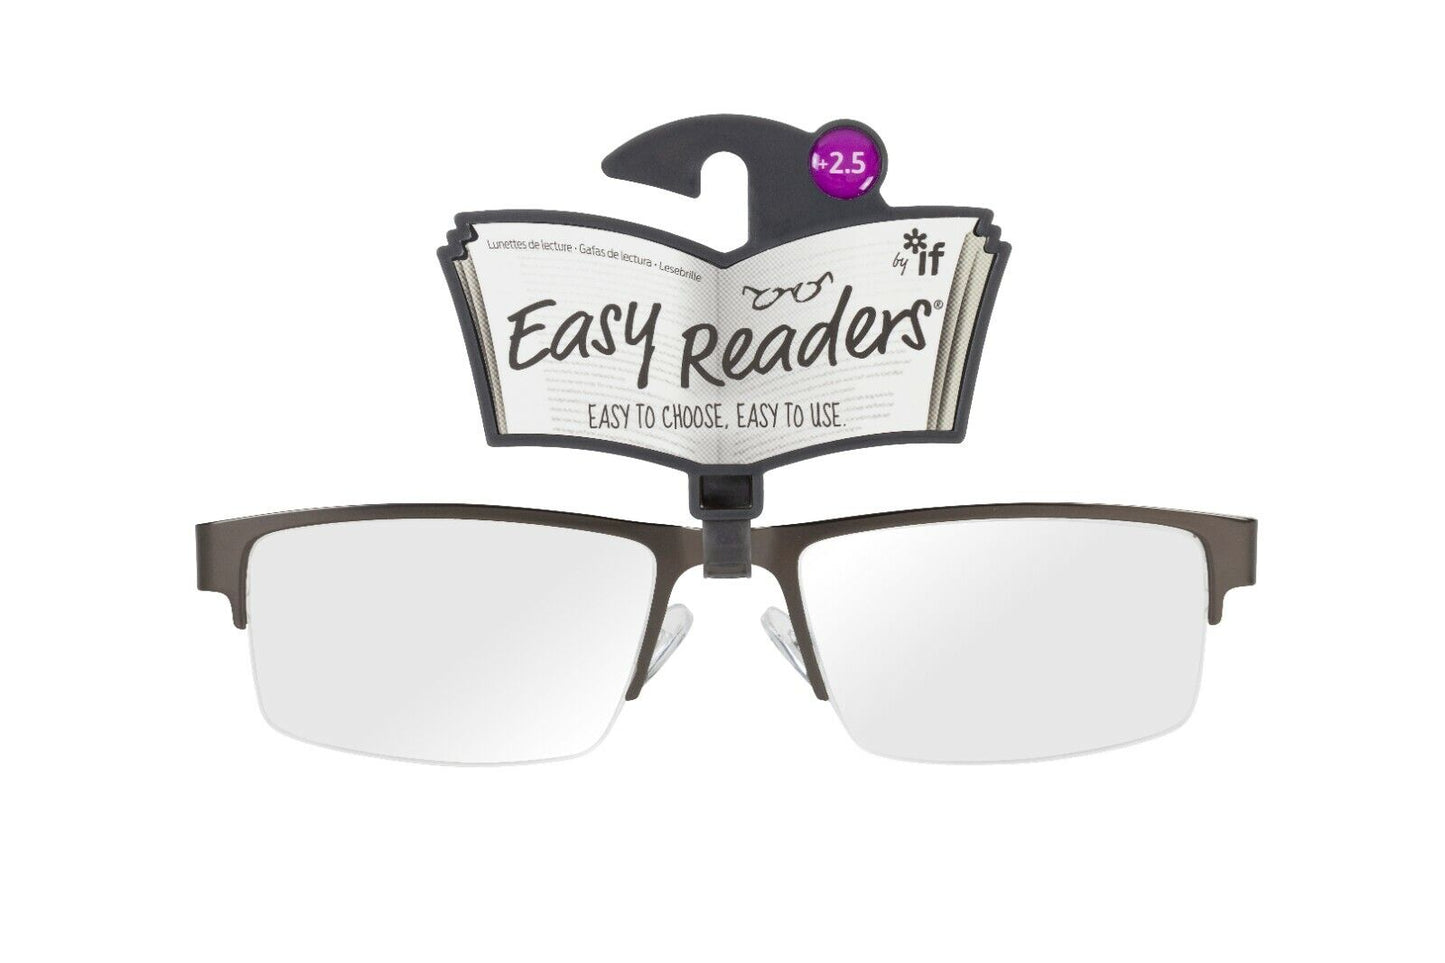 Easy Readers Reading Glasses - Metal Half Frame Grey